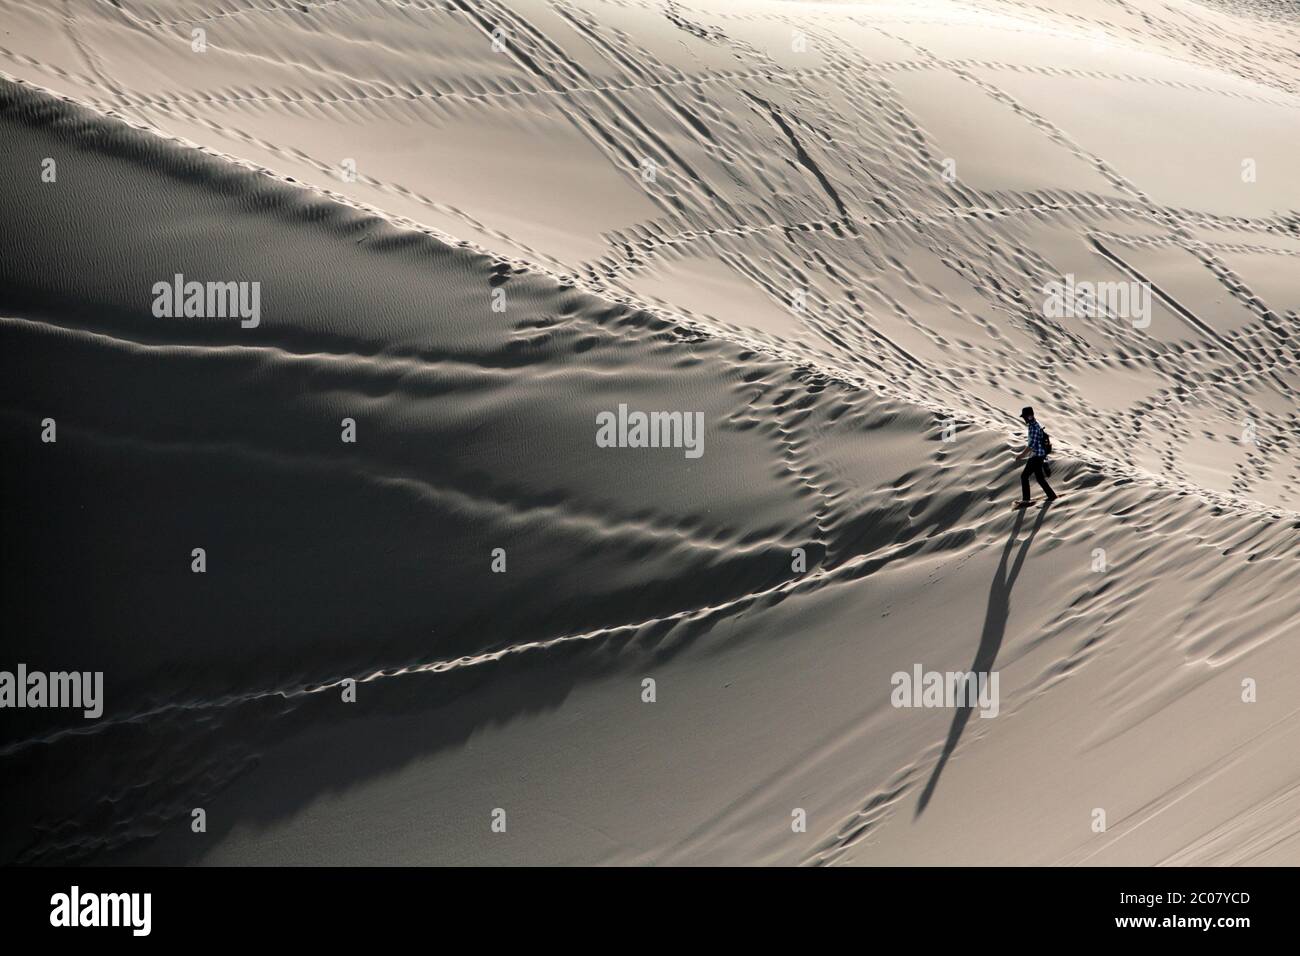 Las dunas de arena cantadas (Ming Sha Shan) en Dunhuang, provincia de Gansu, República Popular de China. 30/09/2011. Fotografía: Stuart Boulton/Alamy Foto de stock